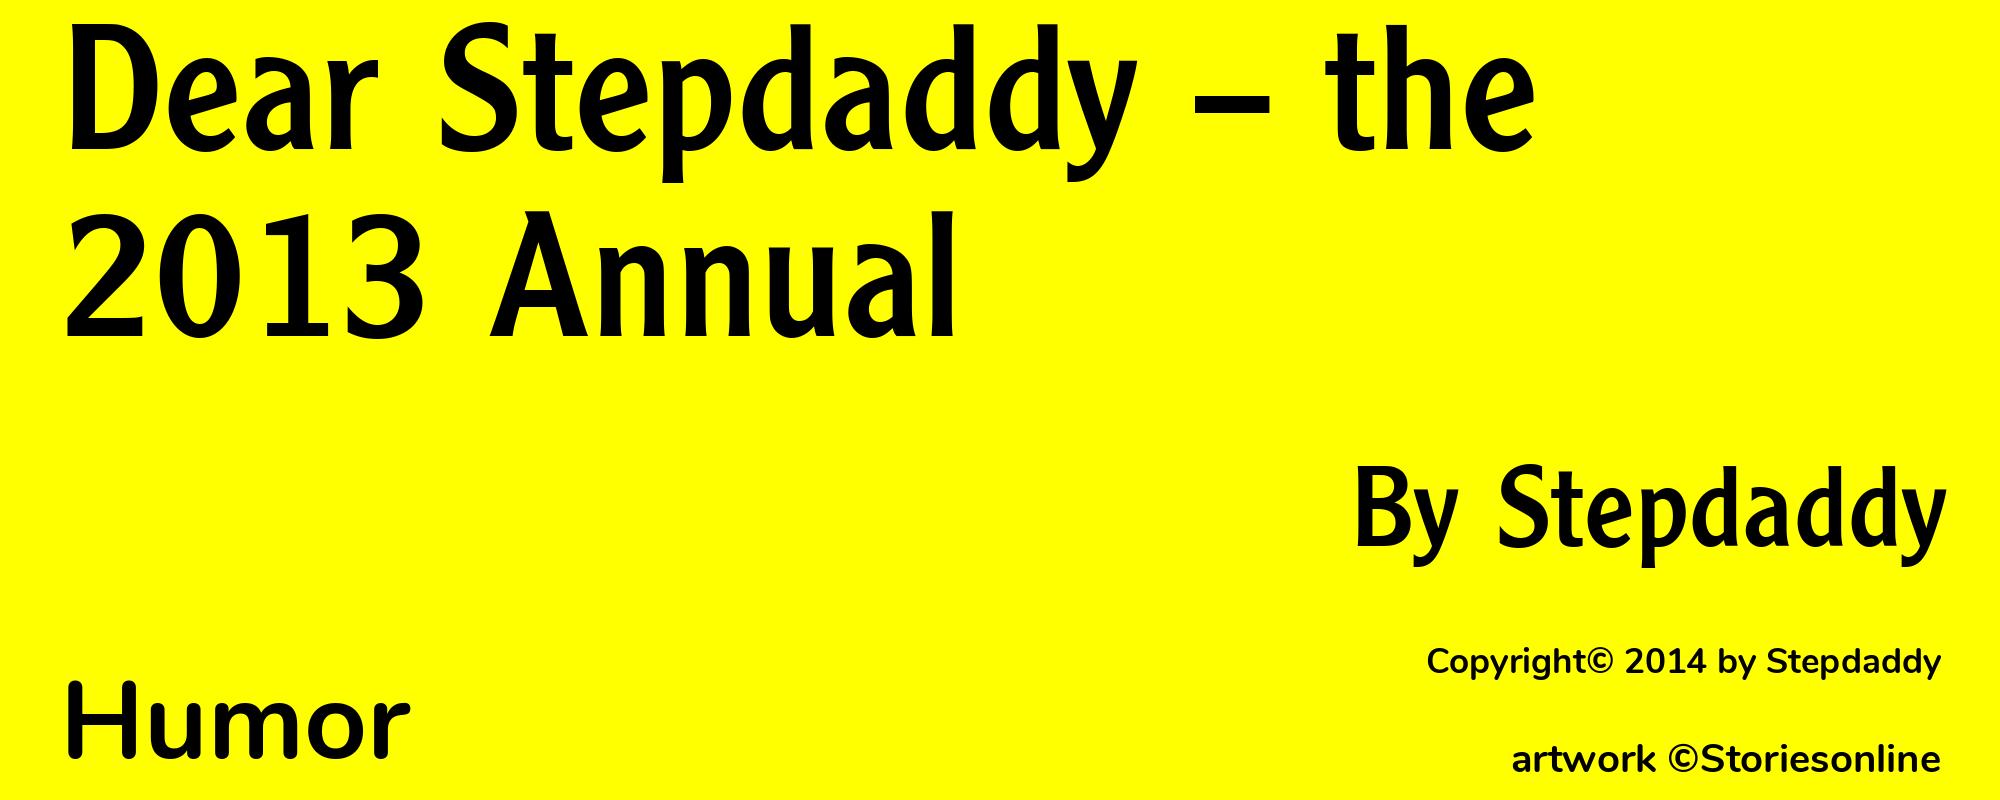 Dear Stepdaddy -- the 2013 Annual - Cover